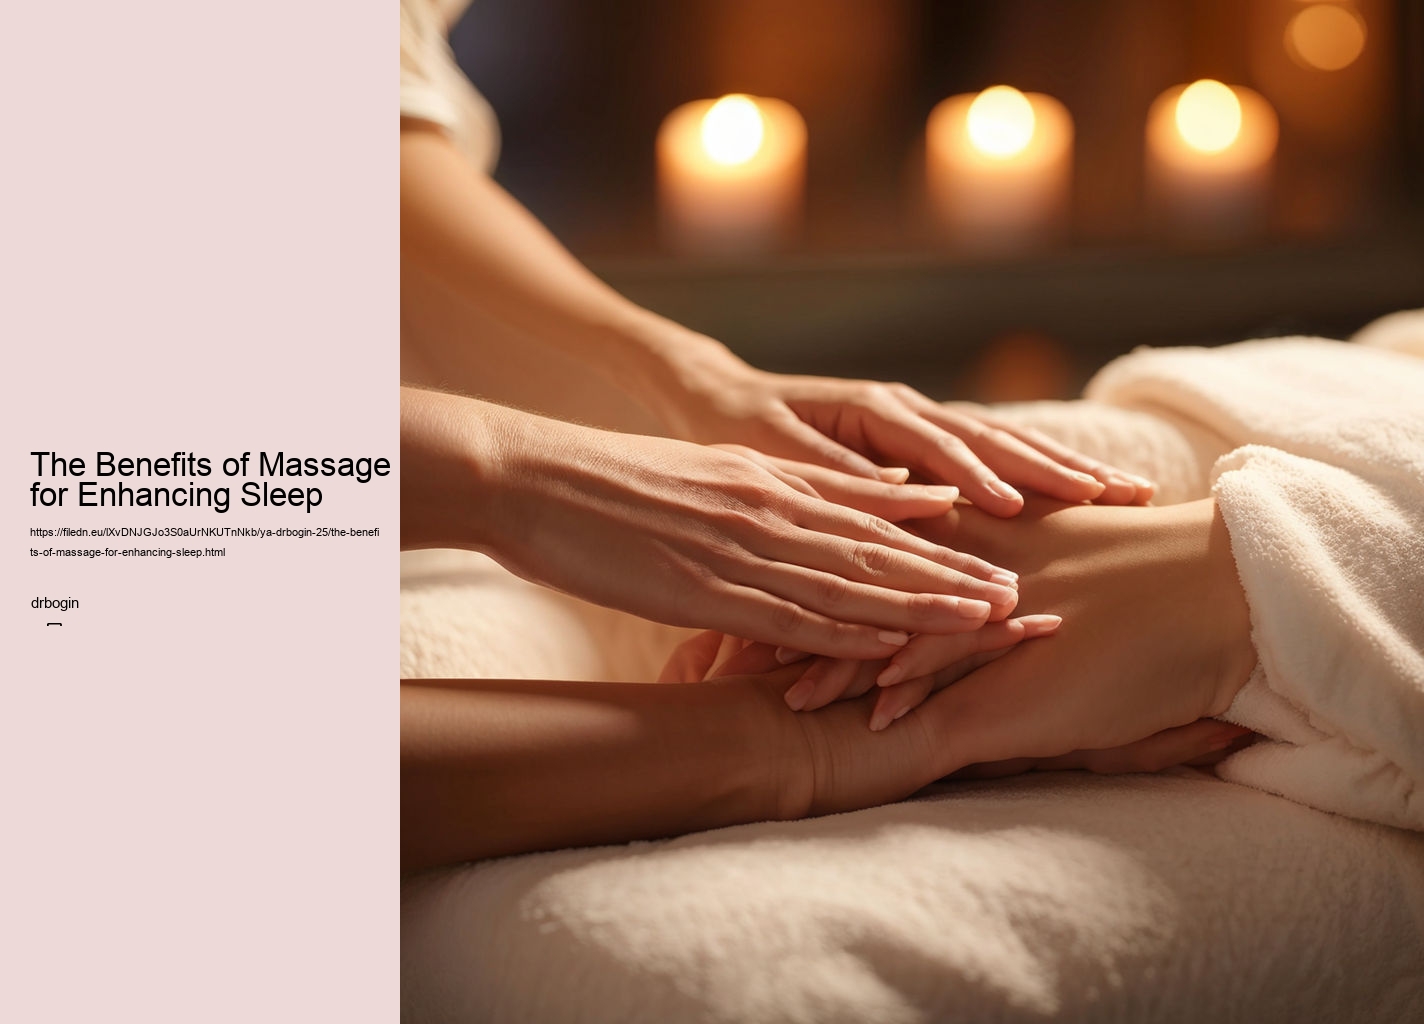 The Benefits of Massage for Enhancing Sleep